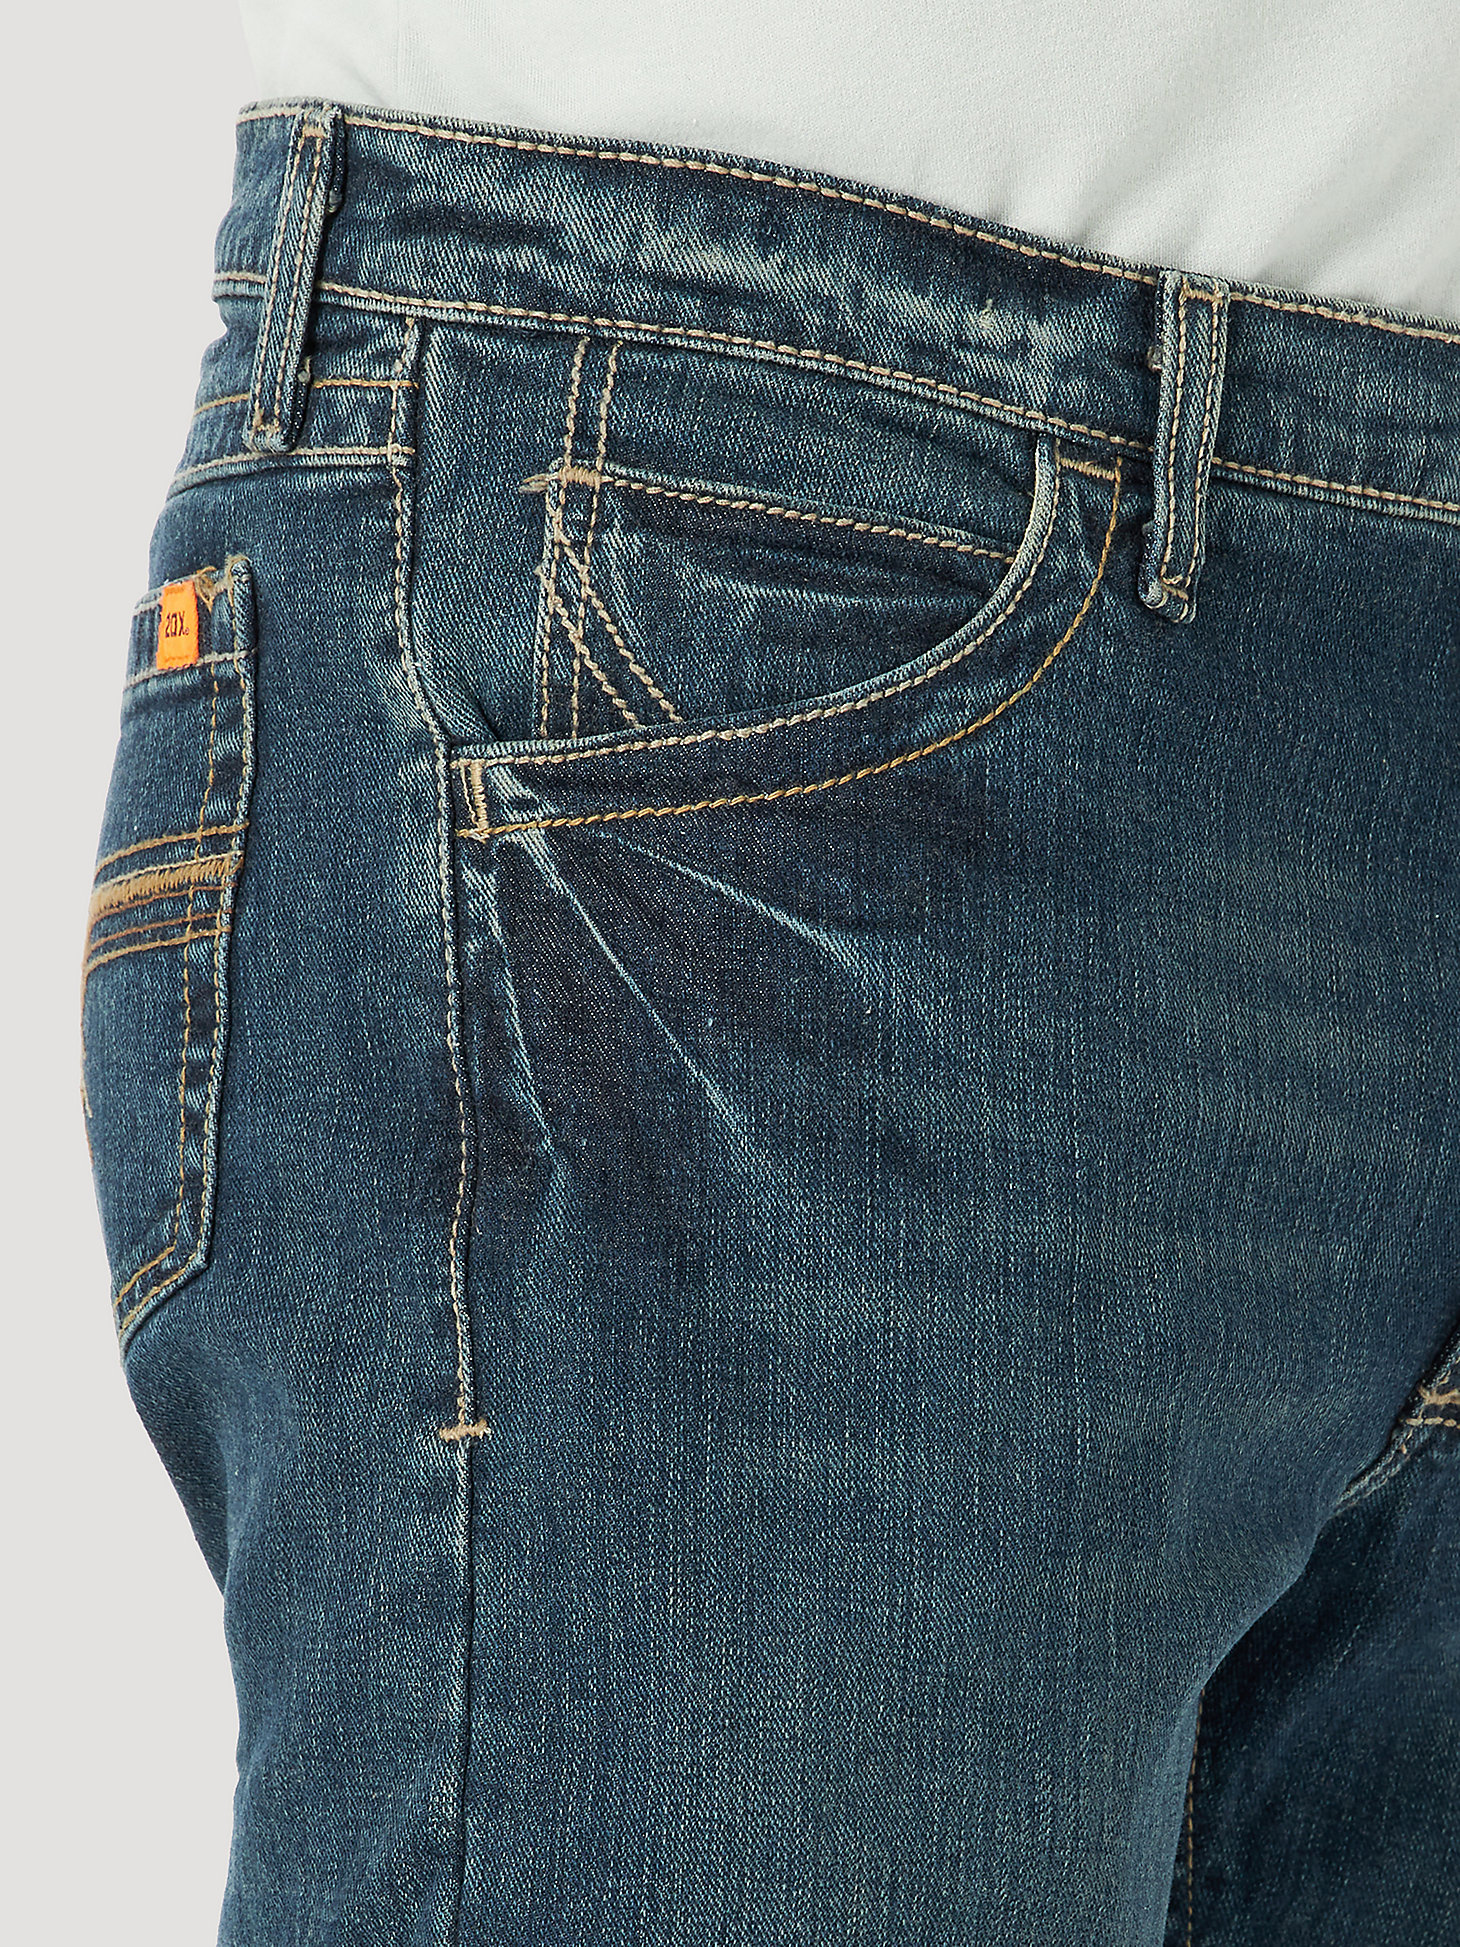 Men's Wrangler® 20X® FR Flame Resistant Boot Jean in WD Wash alternative view 4